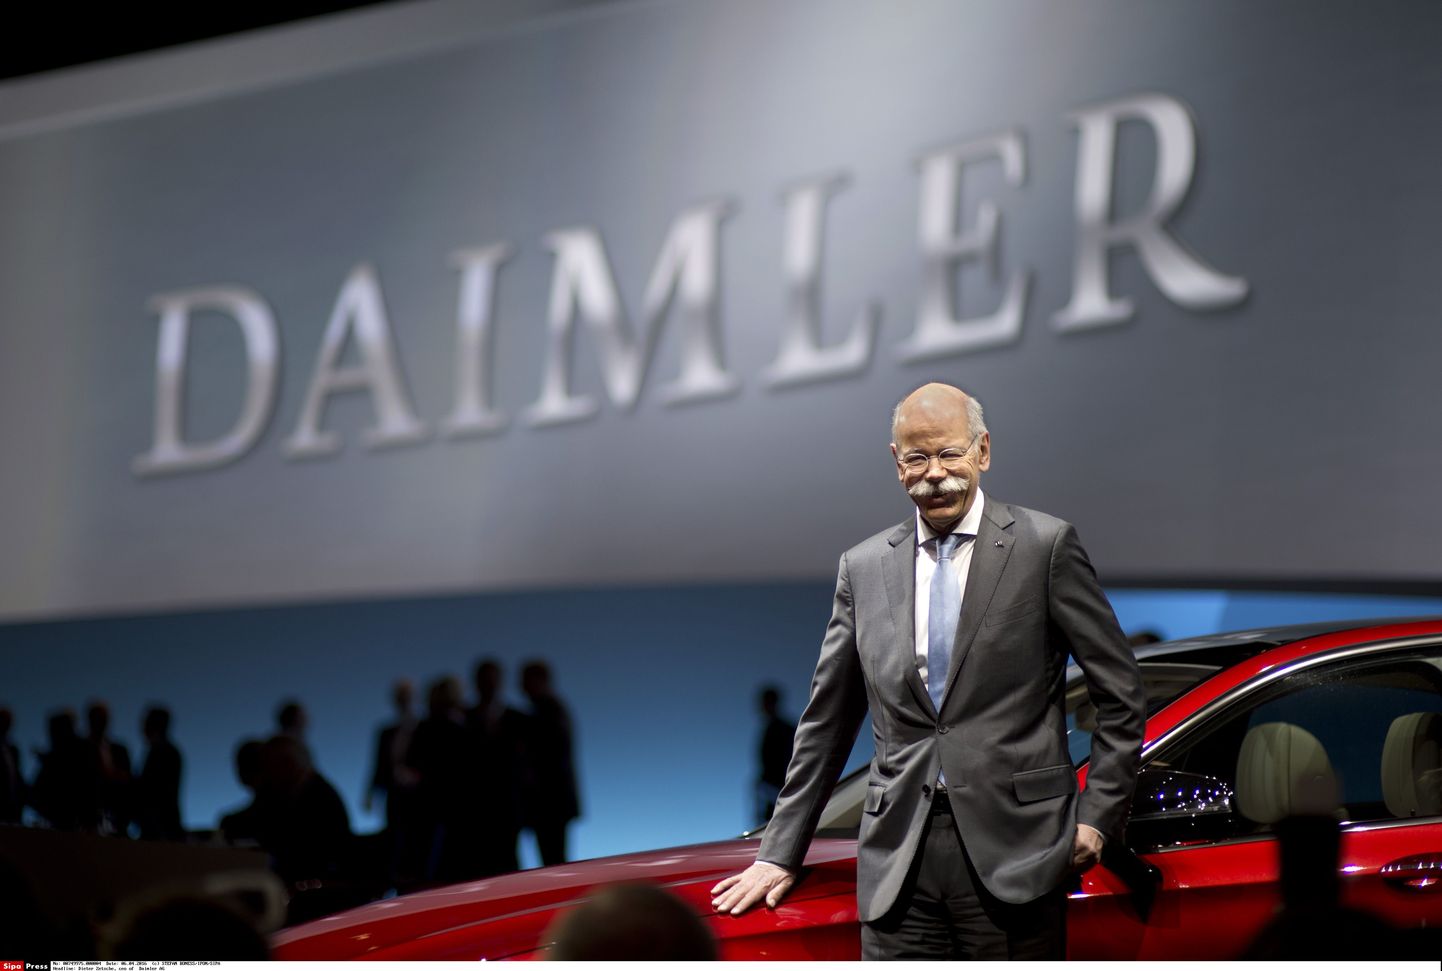 Daimleri tegevjuht Dieter Zetsche